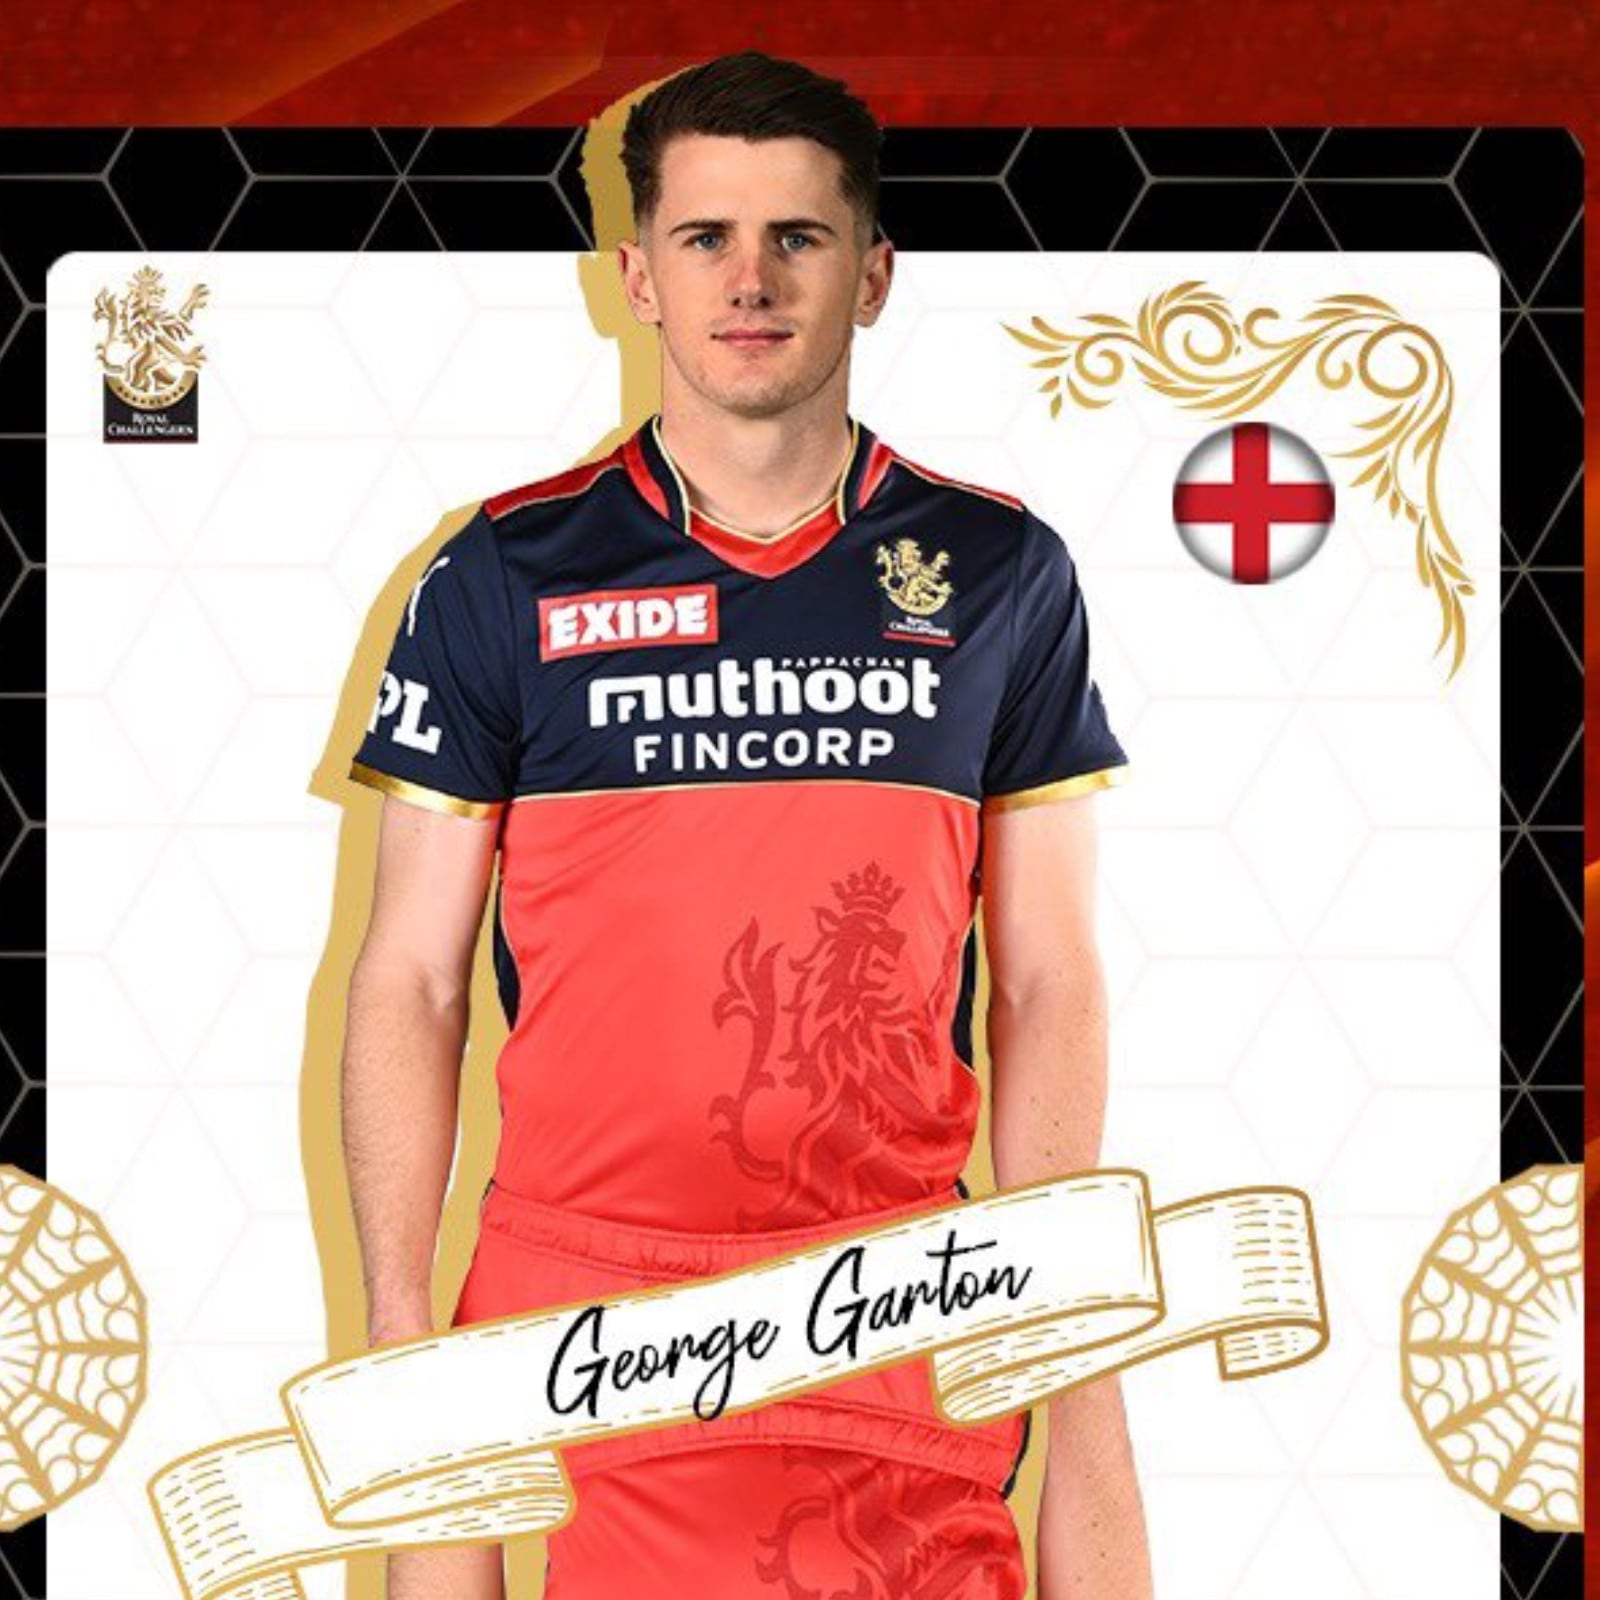 George garton